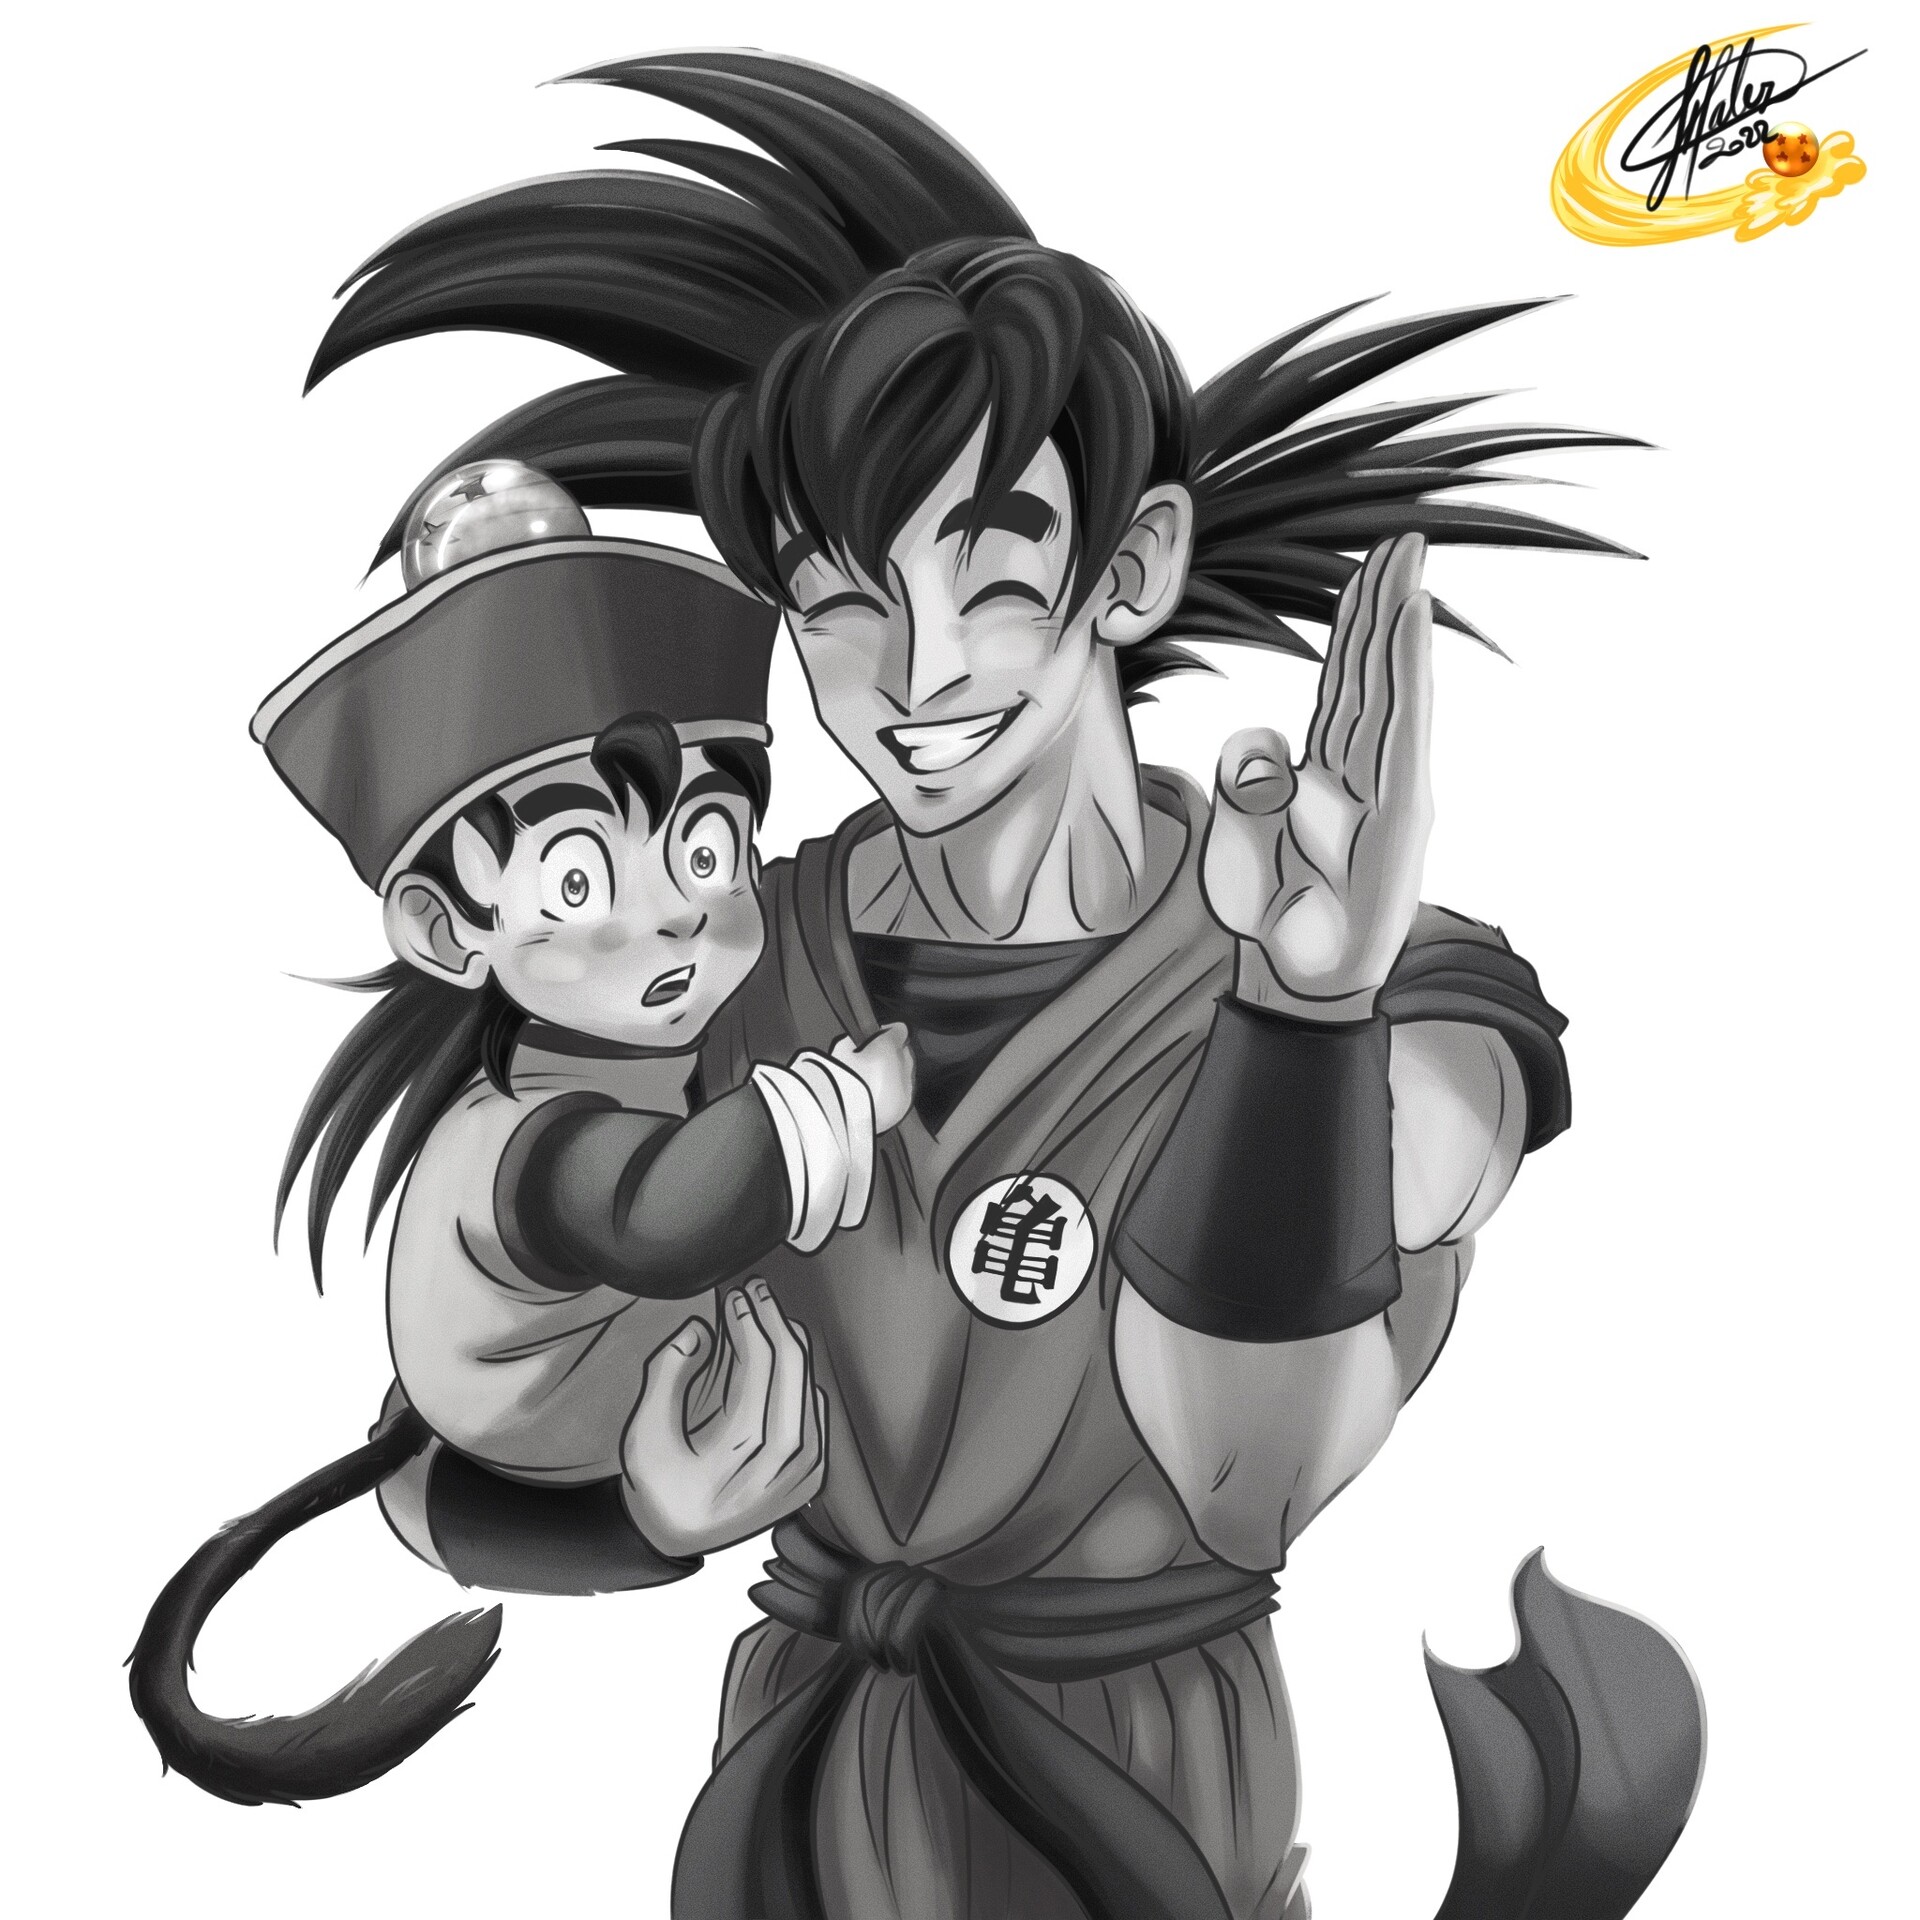 ArtStation - Character re-design - Son Goku and baby Gohan